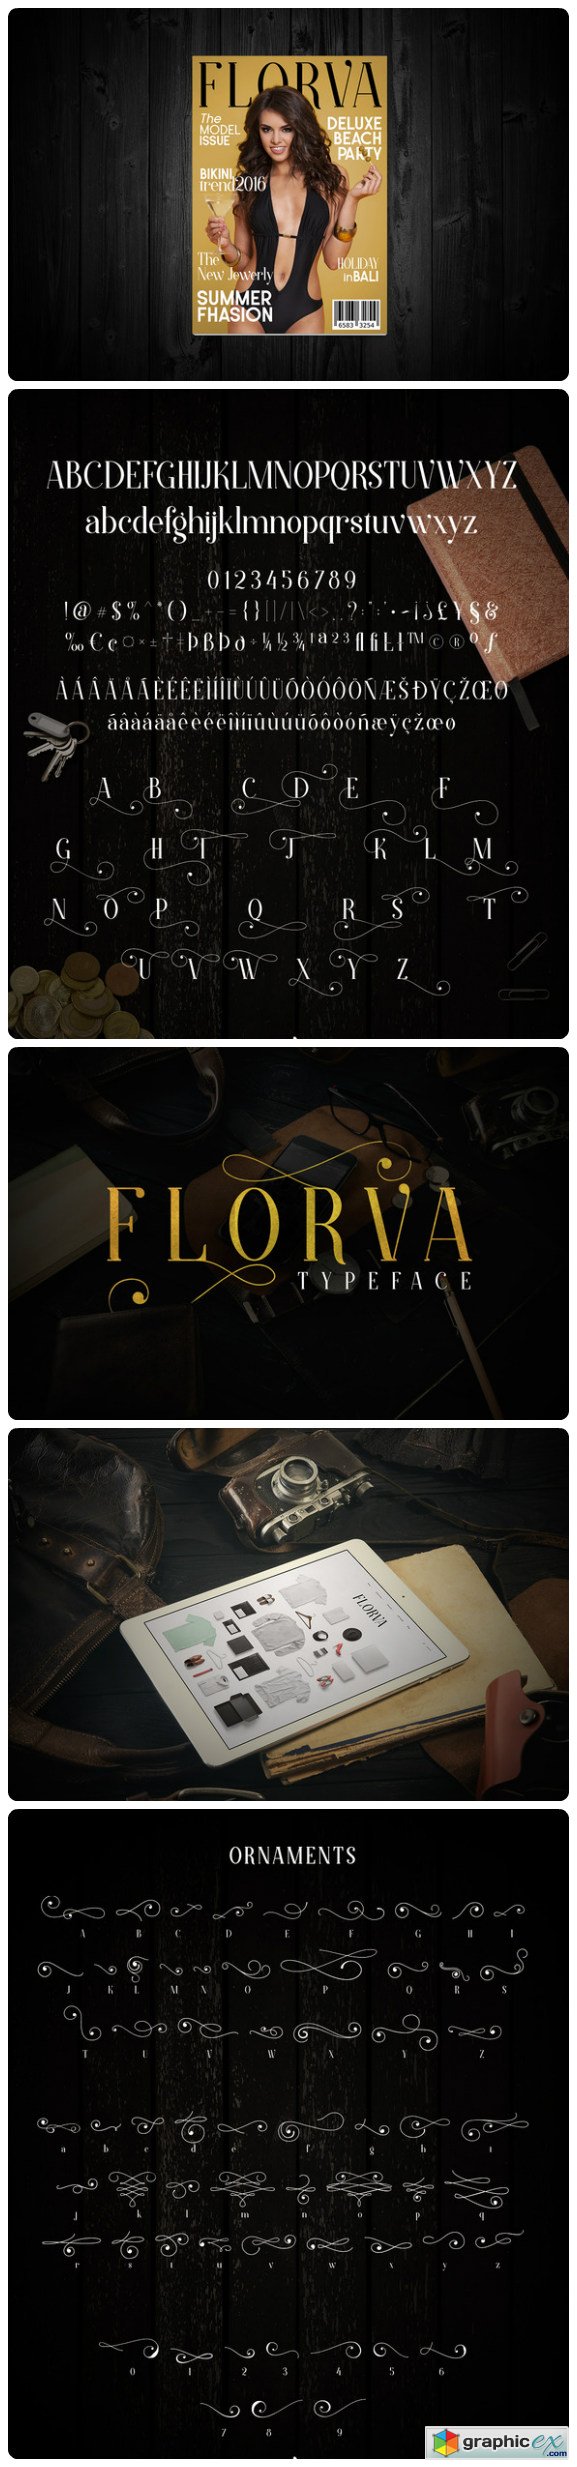 FLORVA Typeface